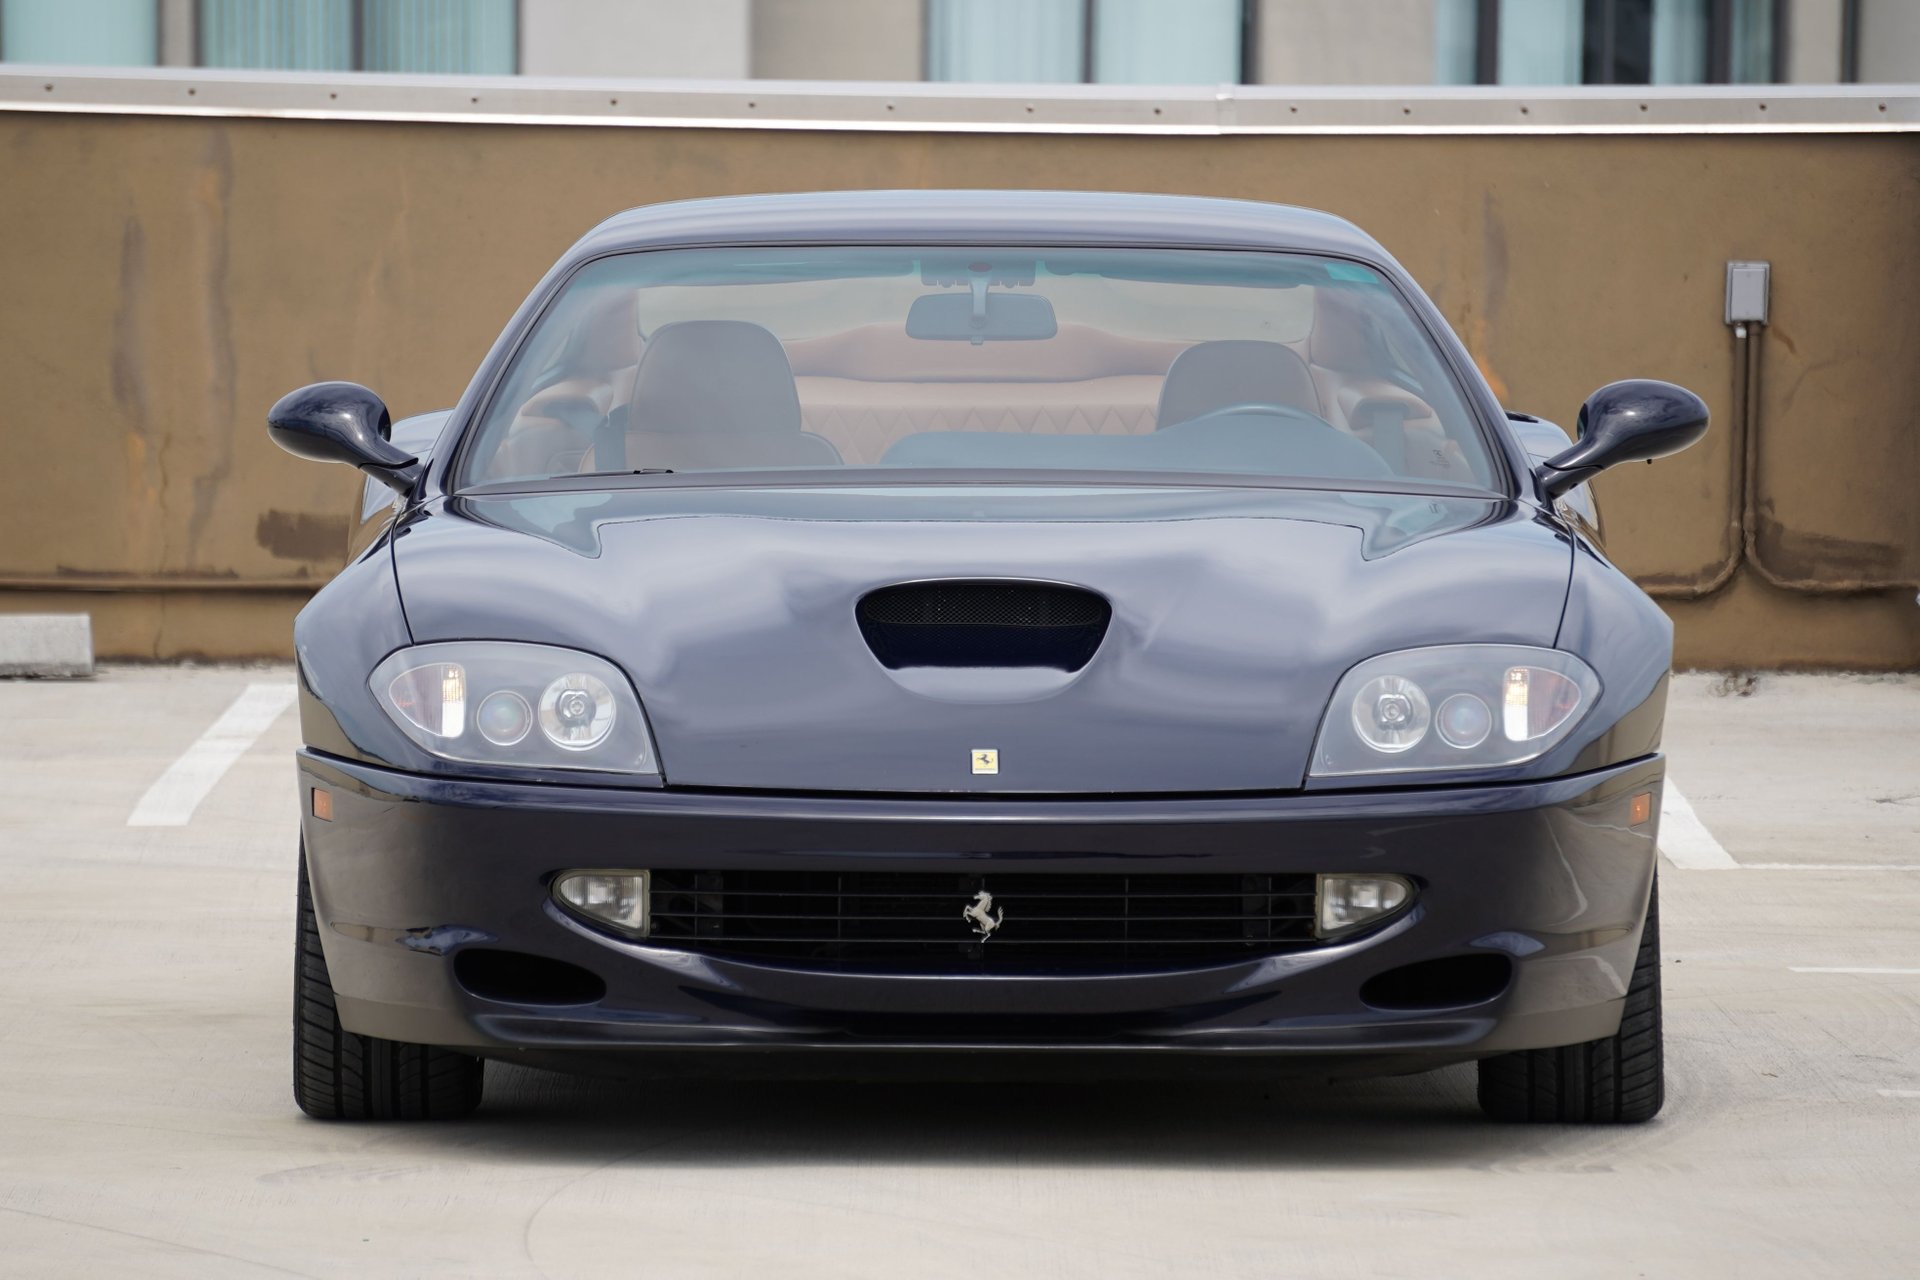 2001 Ferrari 550 Maranello | Classic Car Gallery: Exotic & Vintage Cars -  Motorcar Gallery